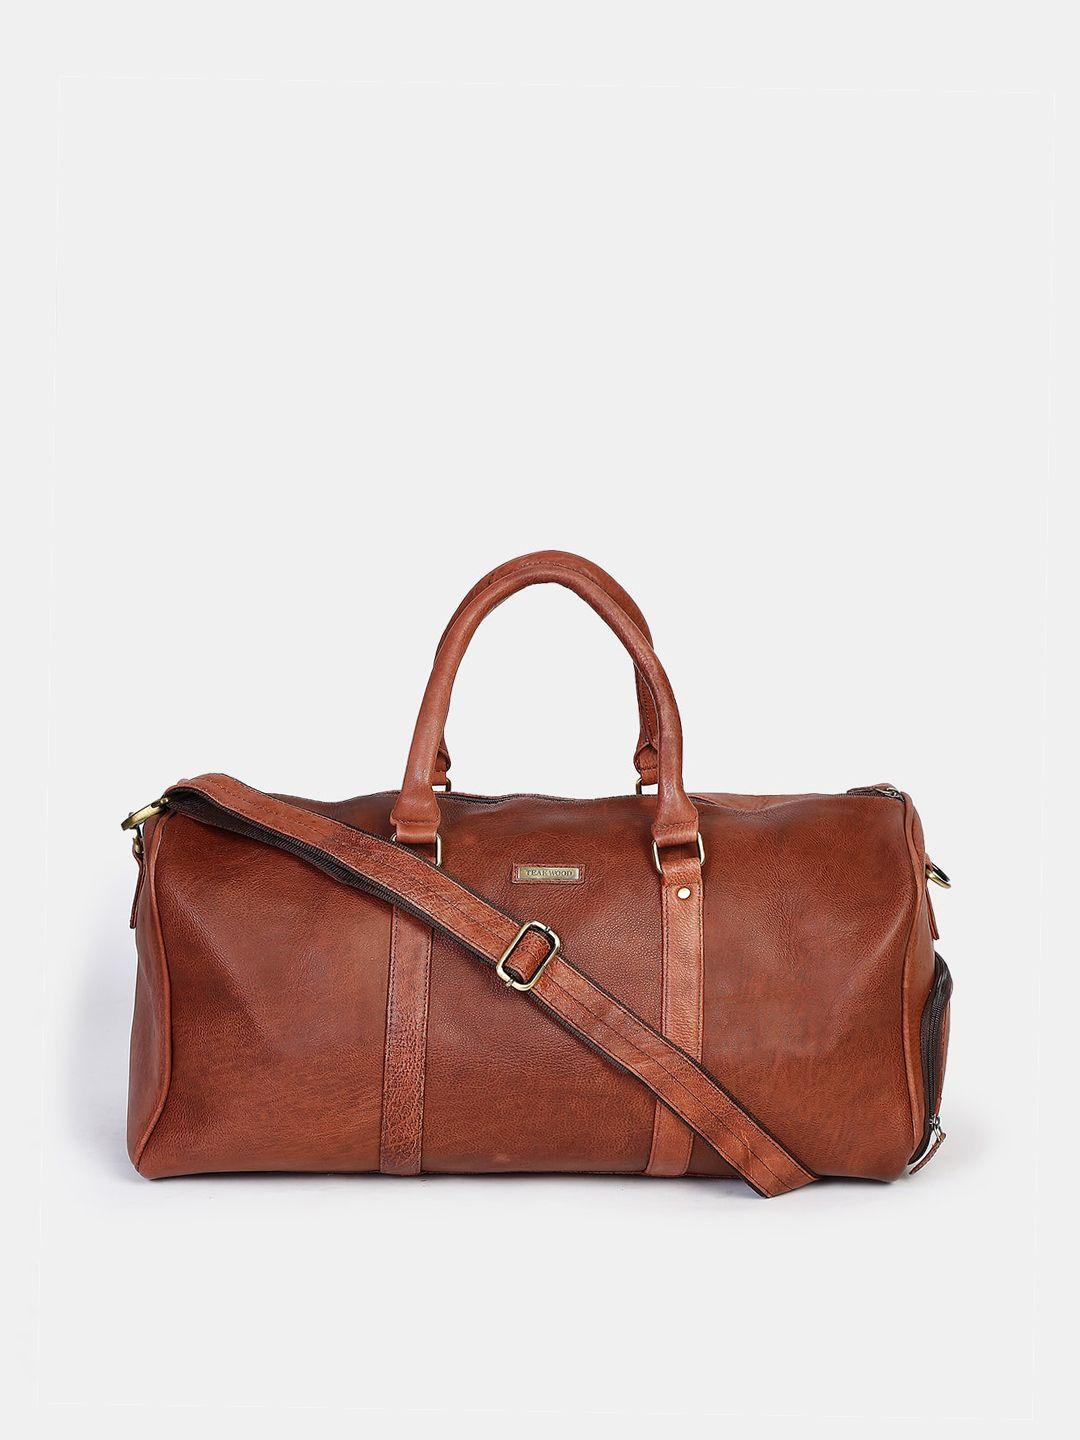 teakwood leathers brown solid leather duffle bag